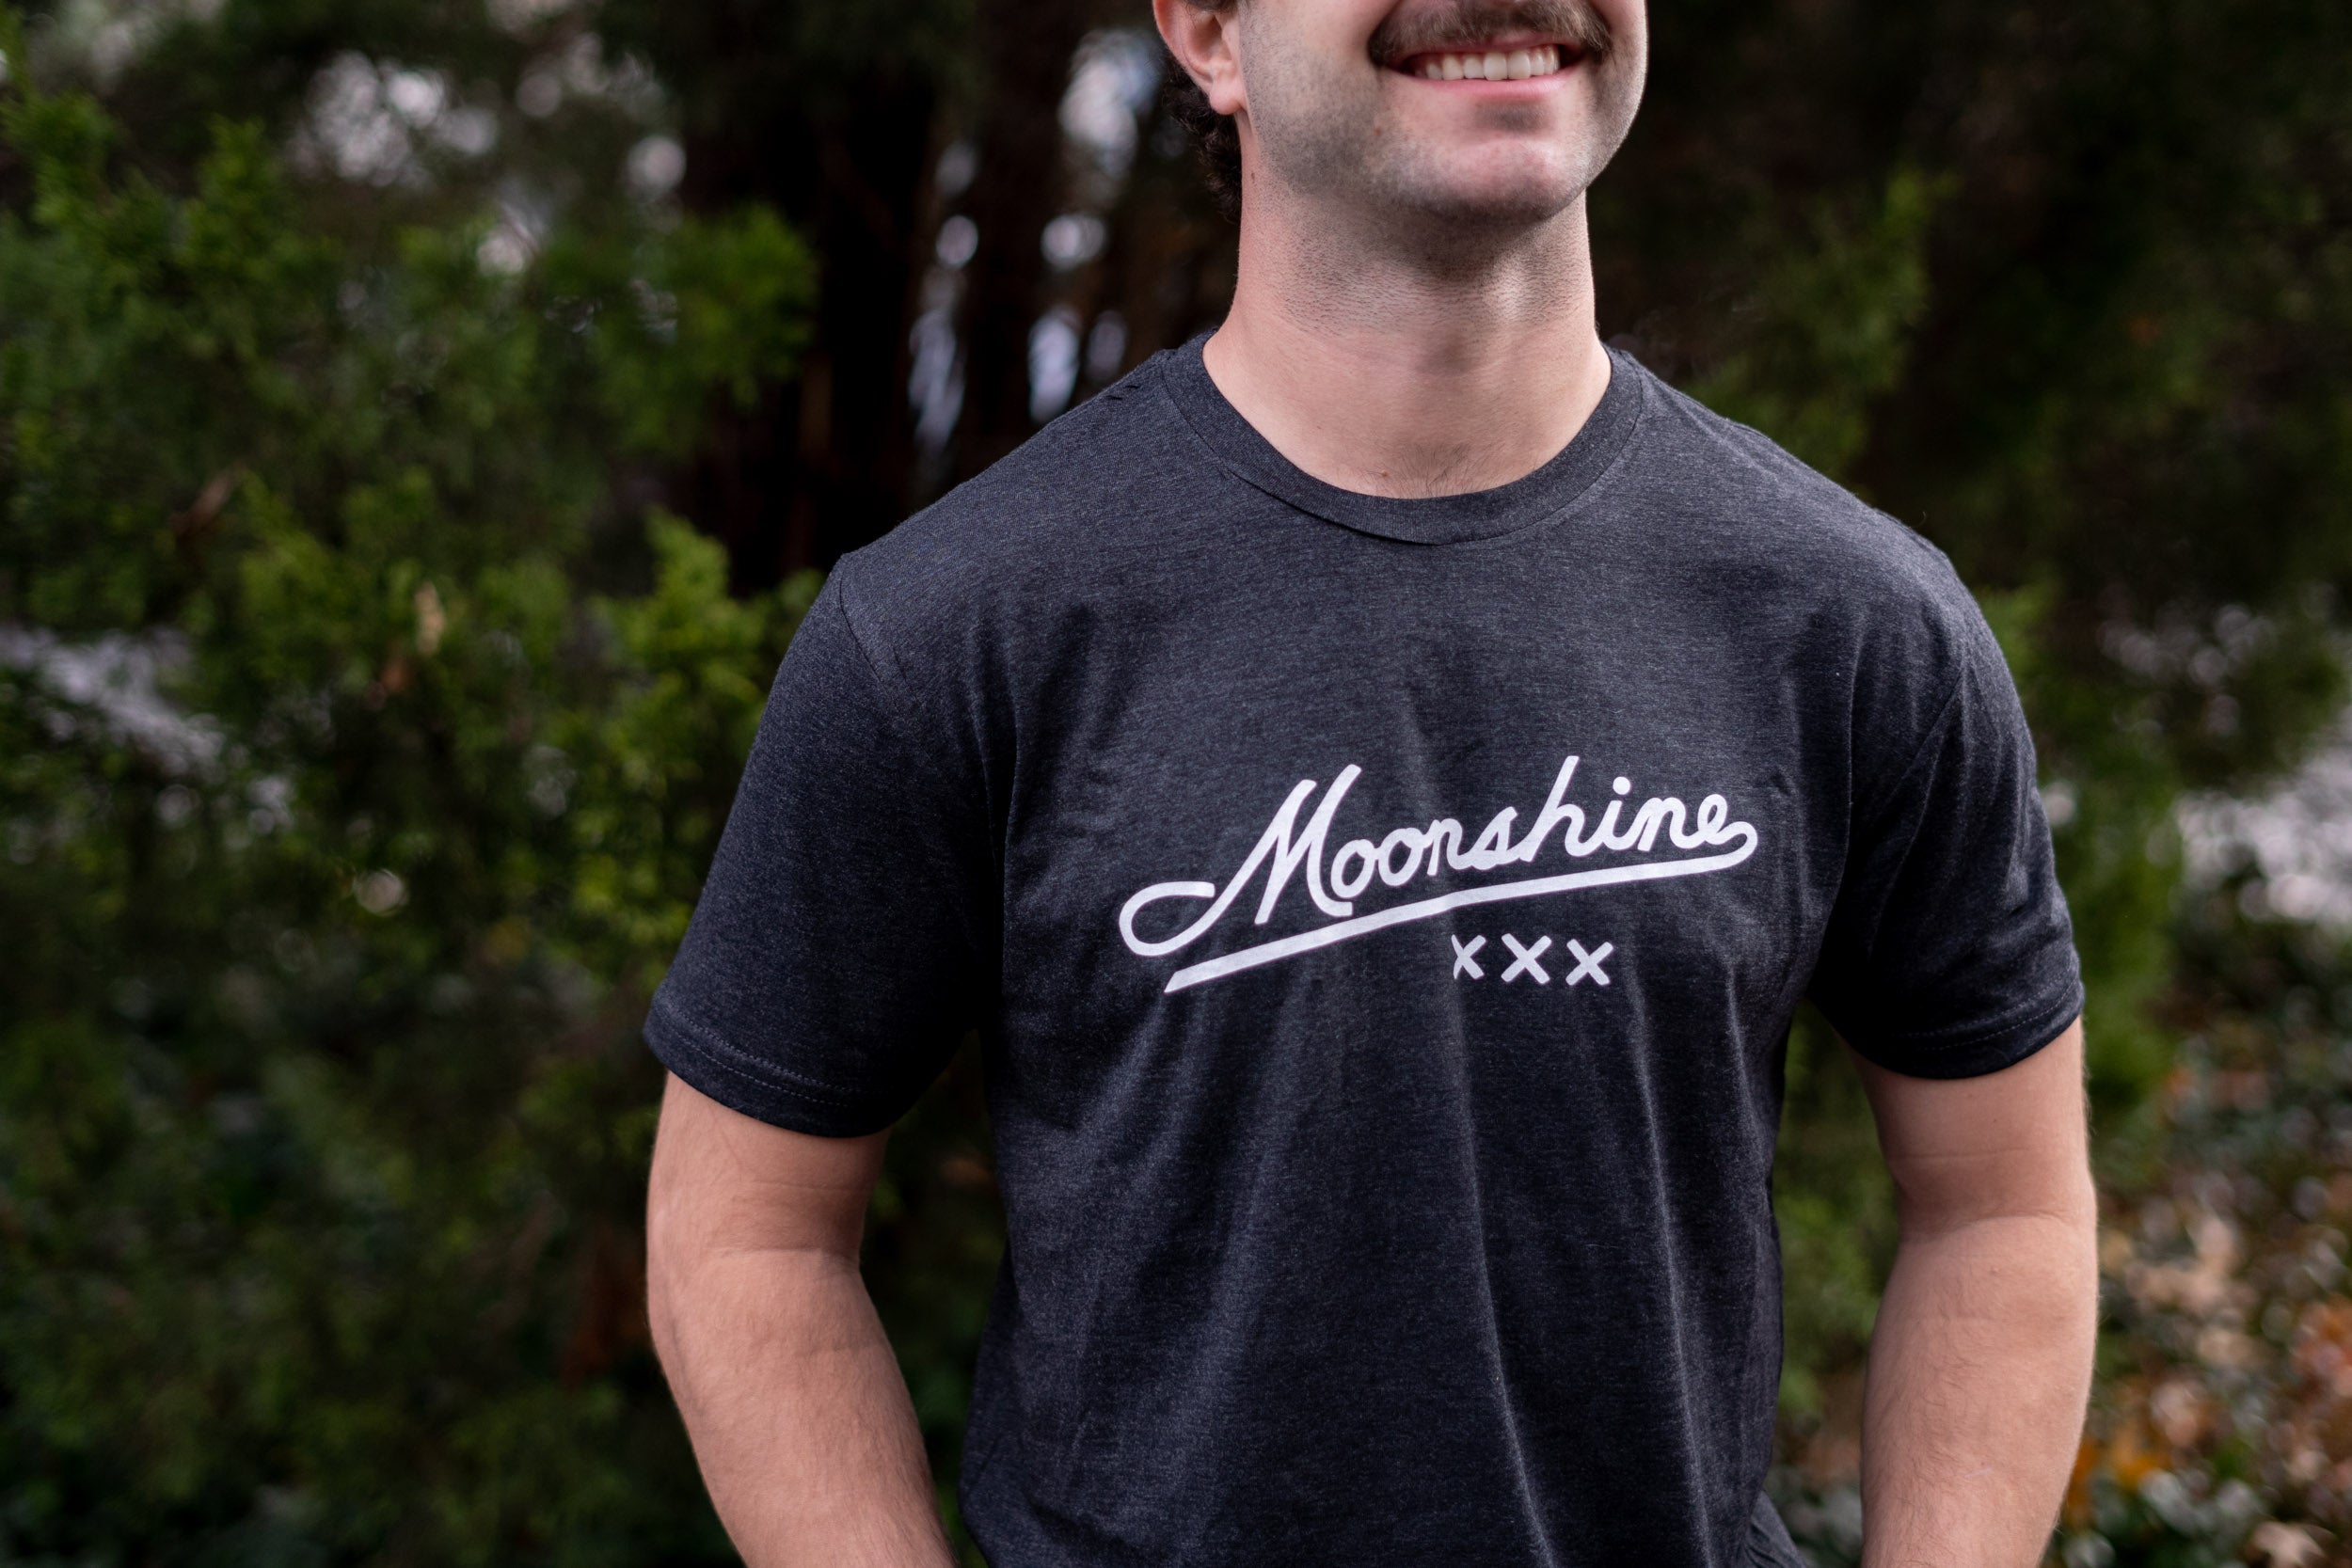 Man wearing a Slate Moonshine XXX T-Shirt